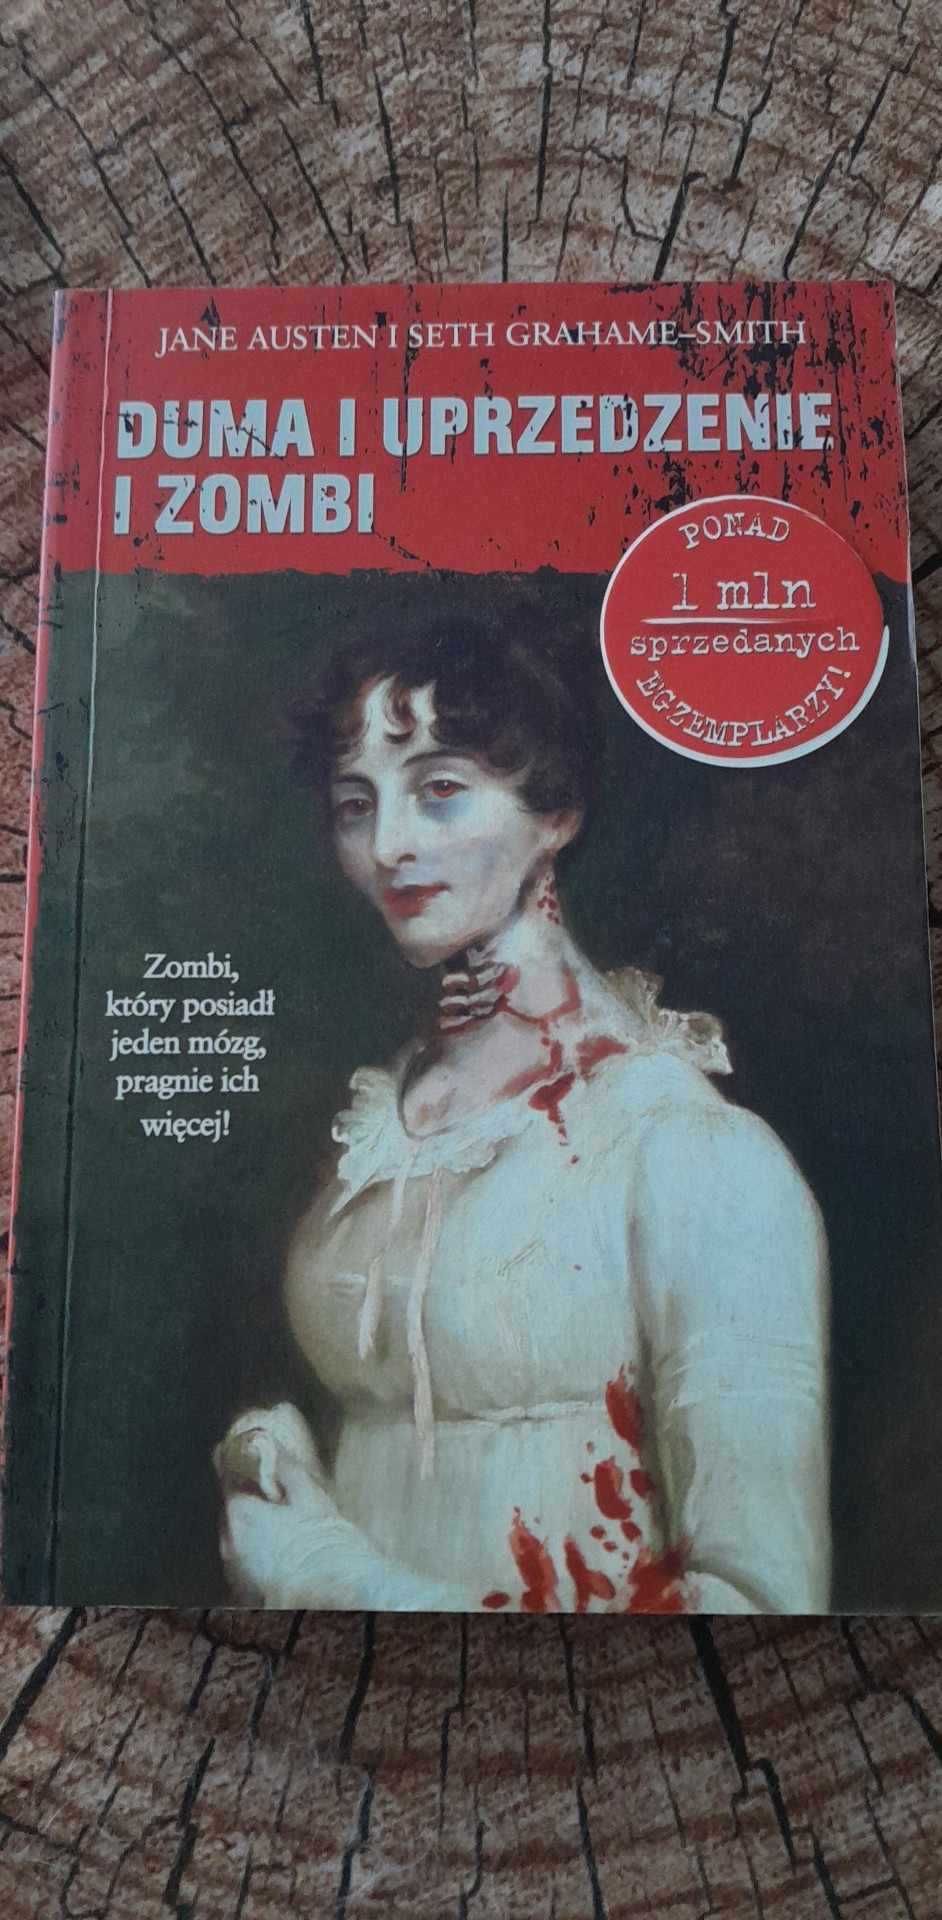 Jane Austen, Seth Grahame-Smith - Duma i uprzedzenie i zombi